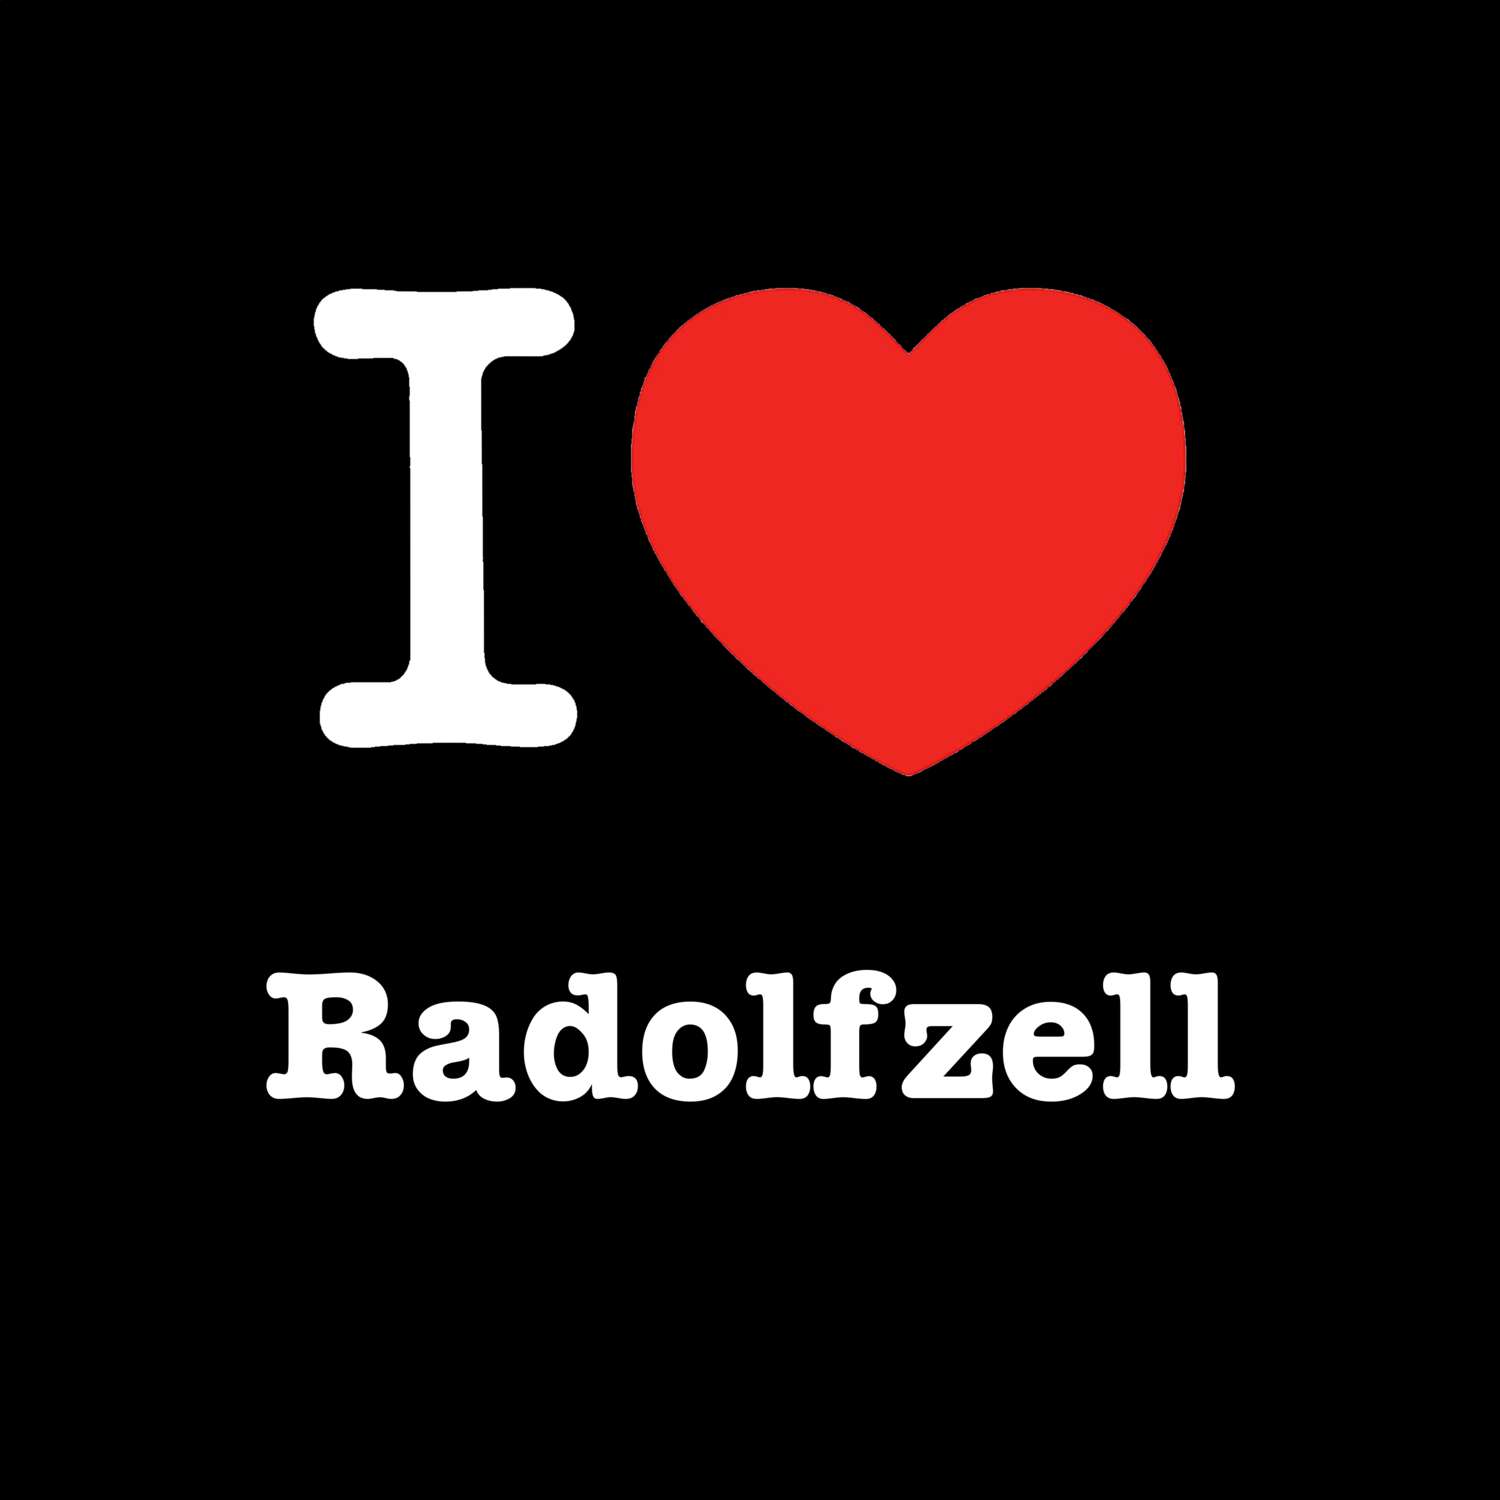 Radolfzell T-Shirt »I love«